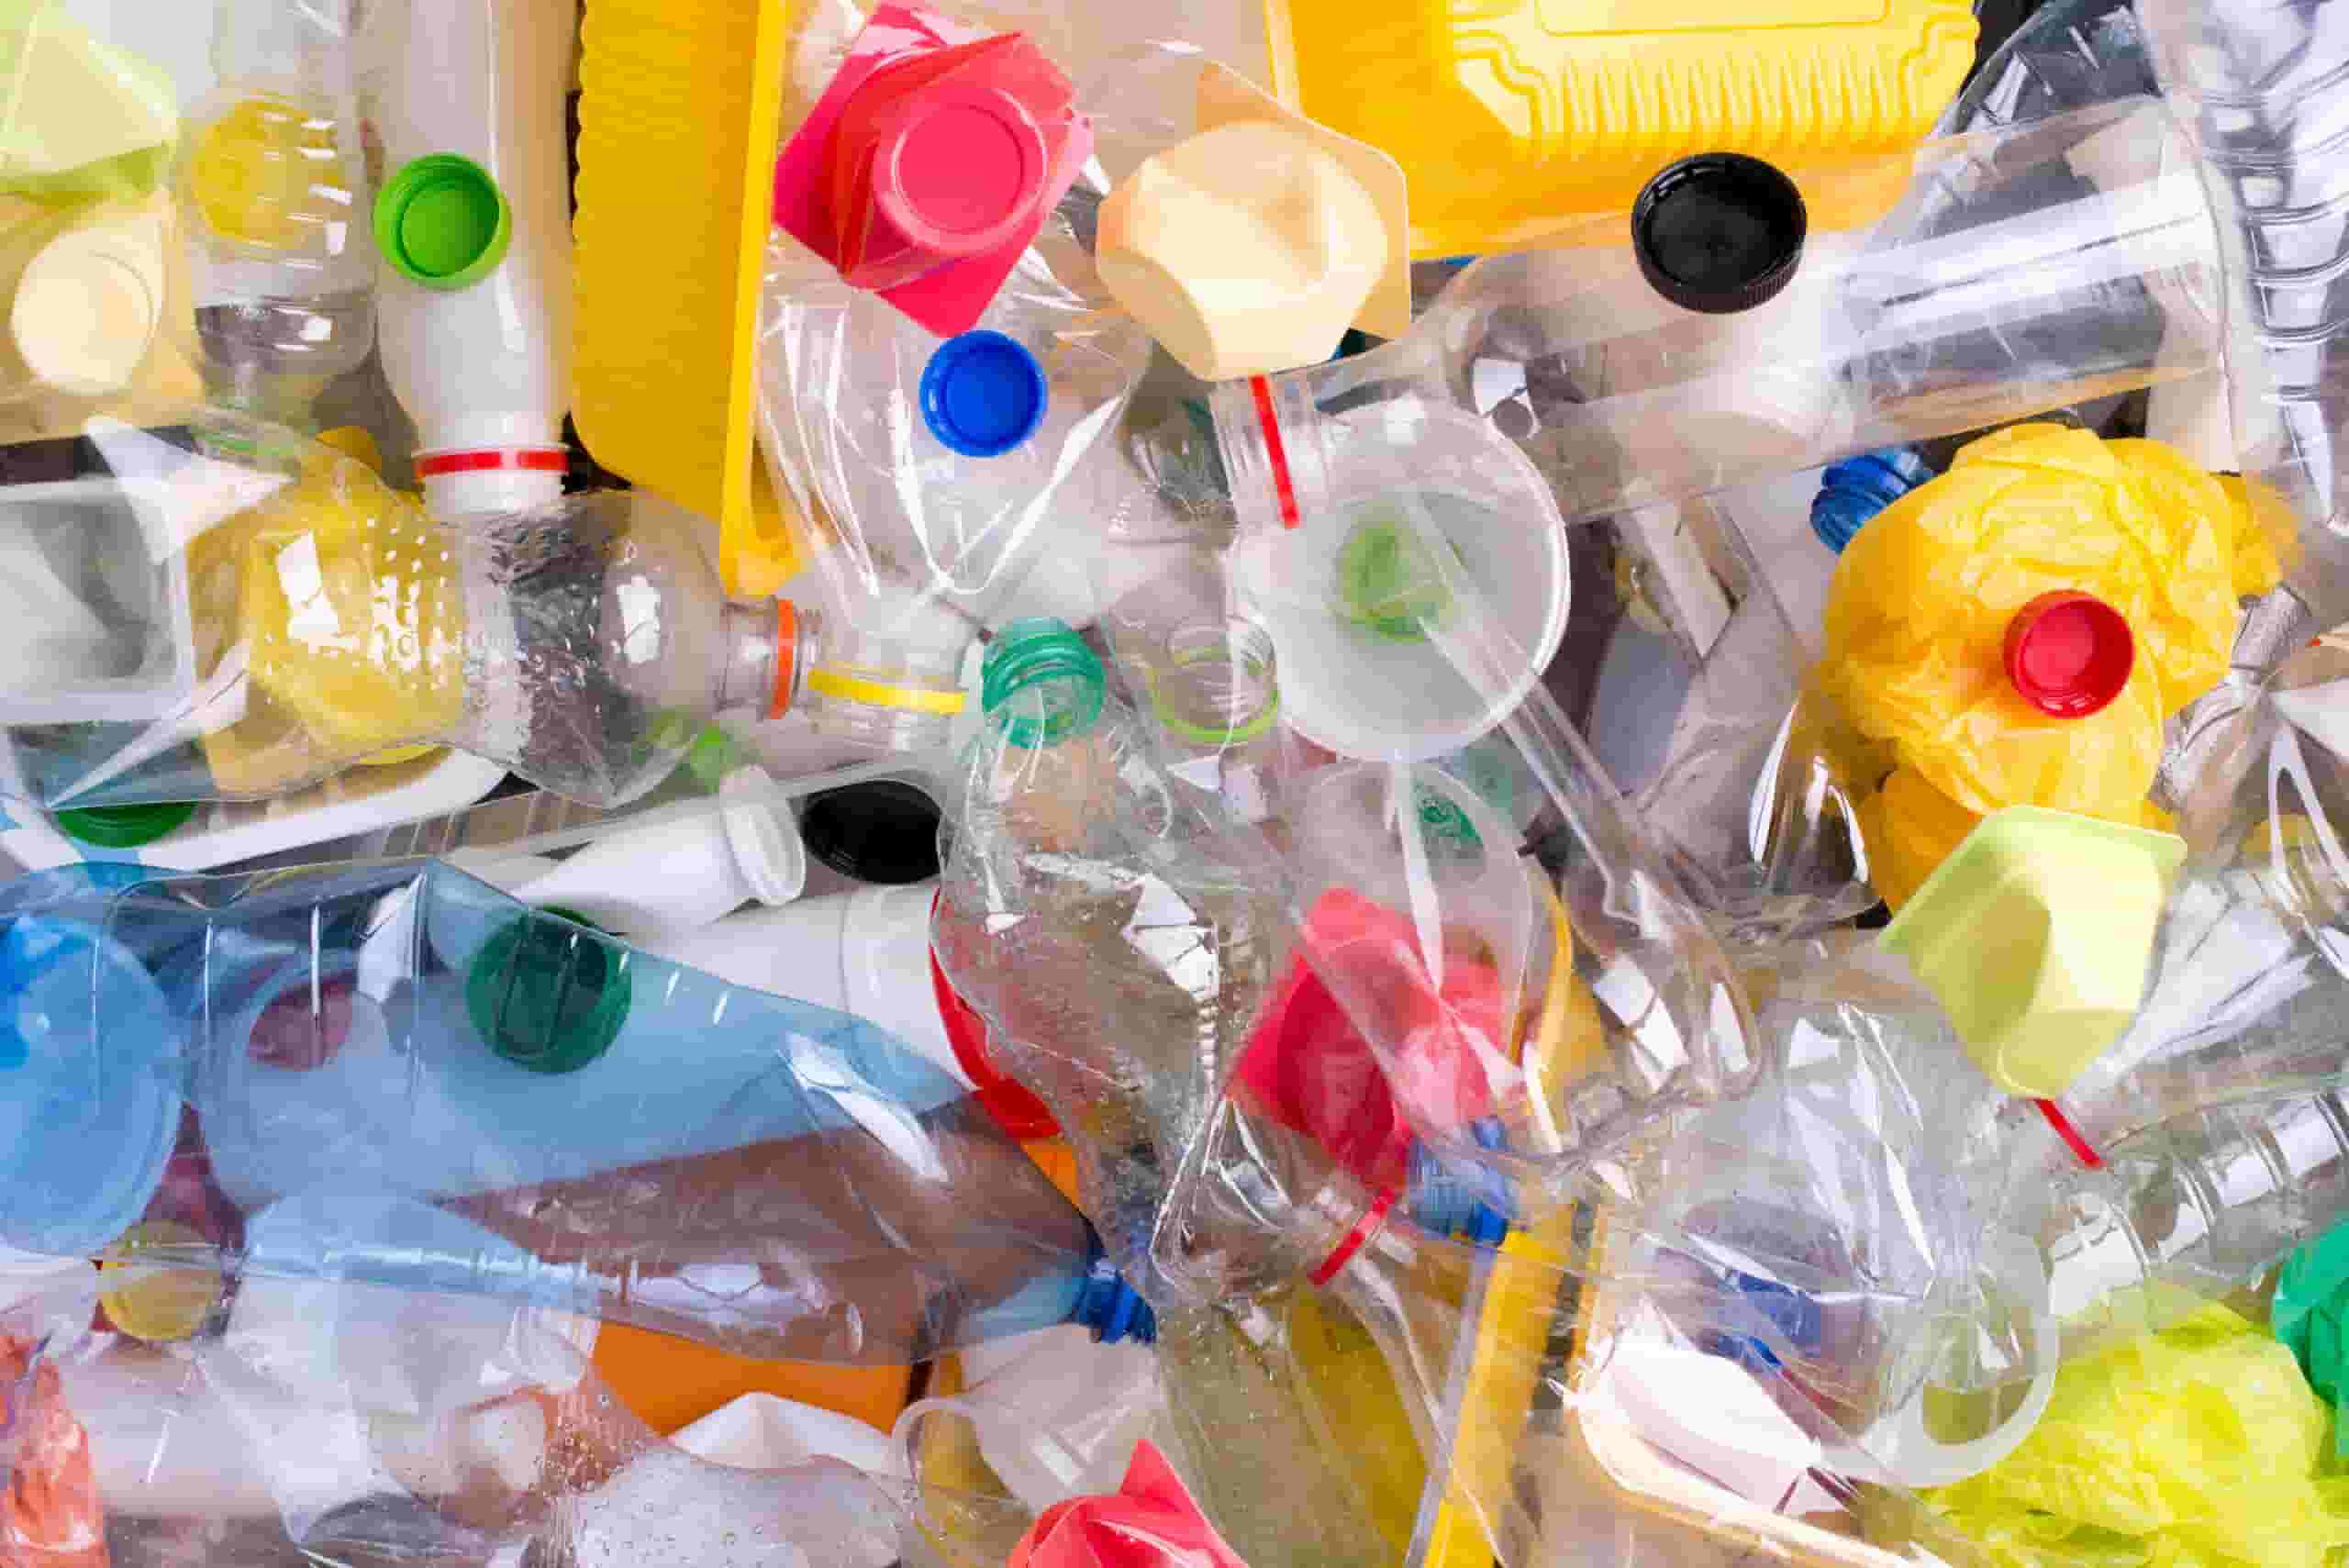 Average household plastic waste